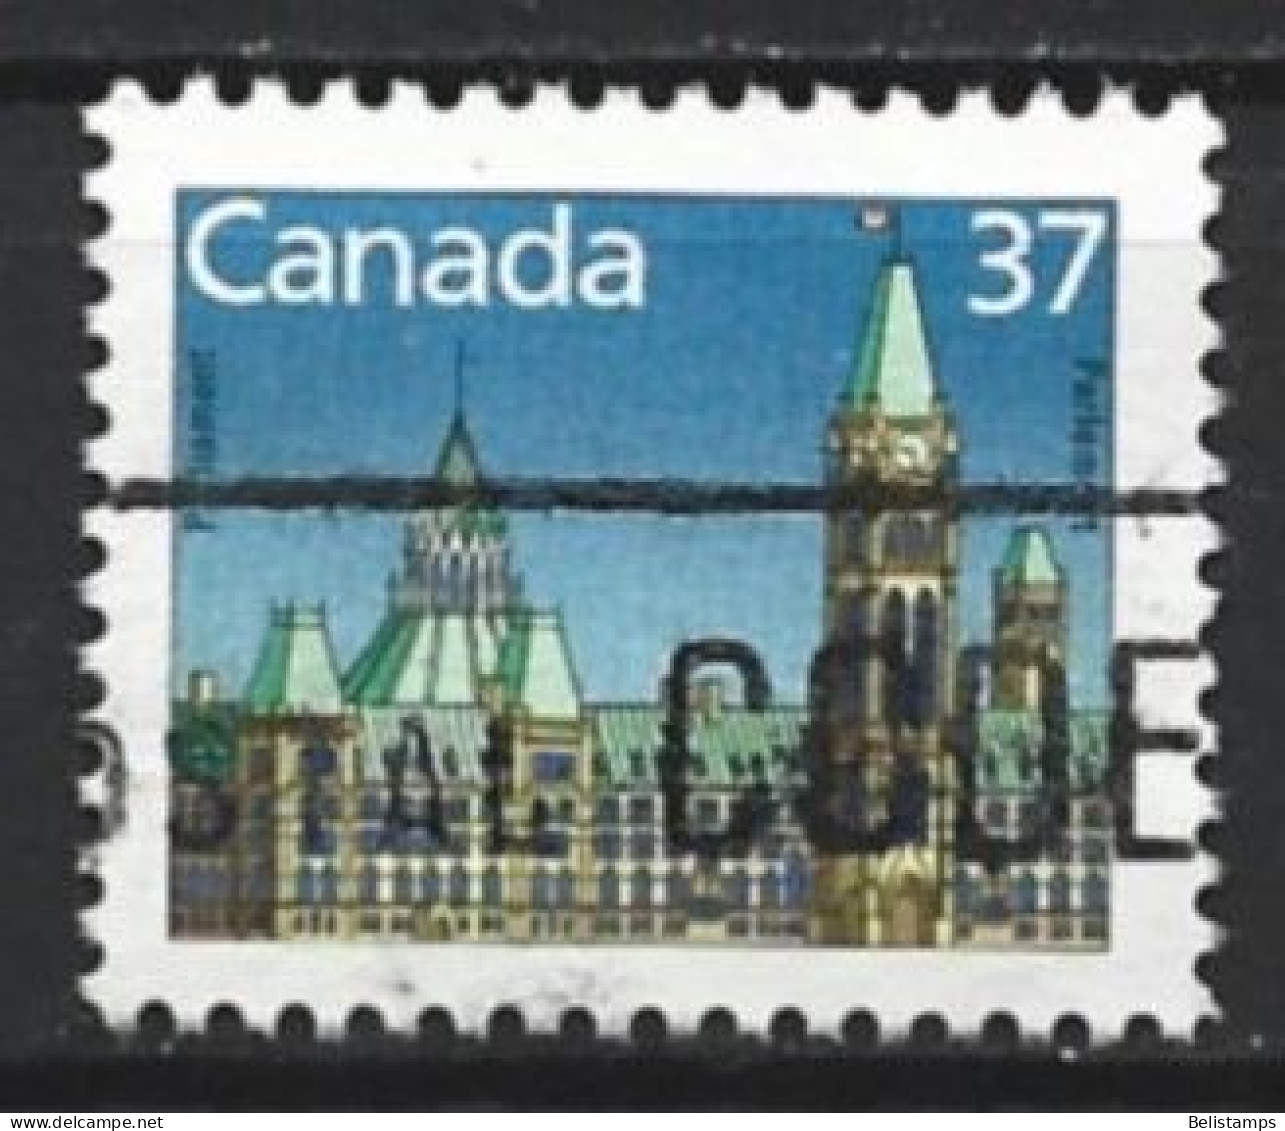 Canada 1987. Scott #1163c (U) Parliament, Center Block - Single Stamps